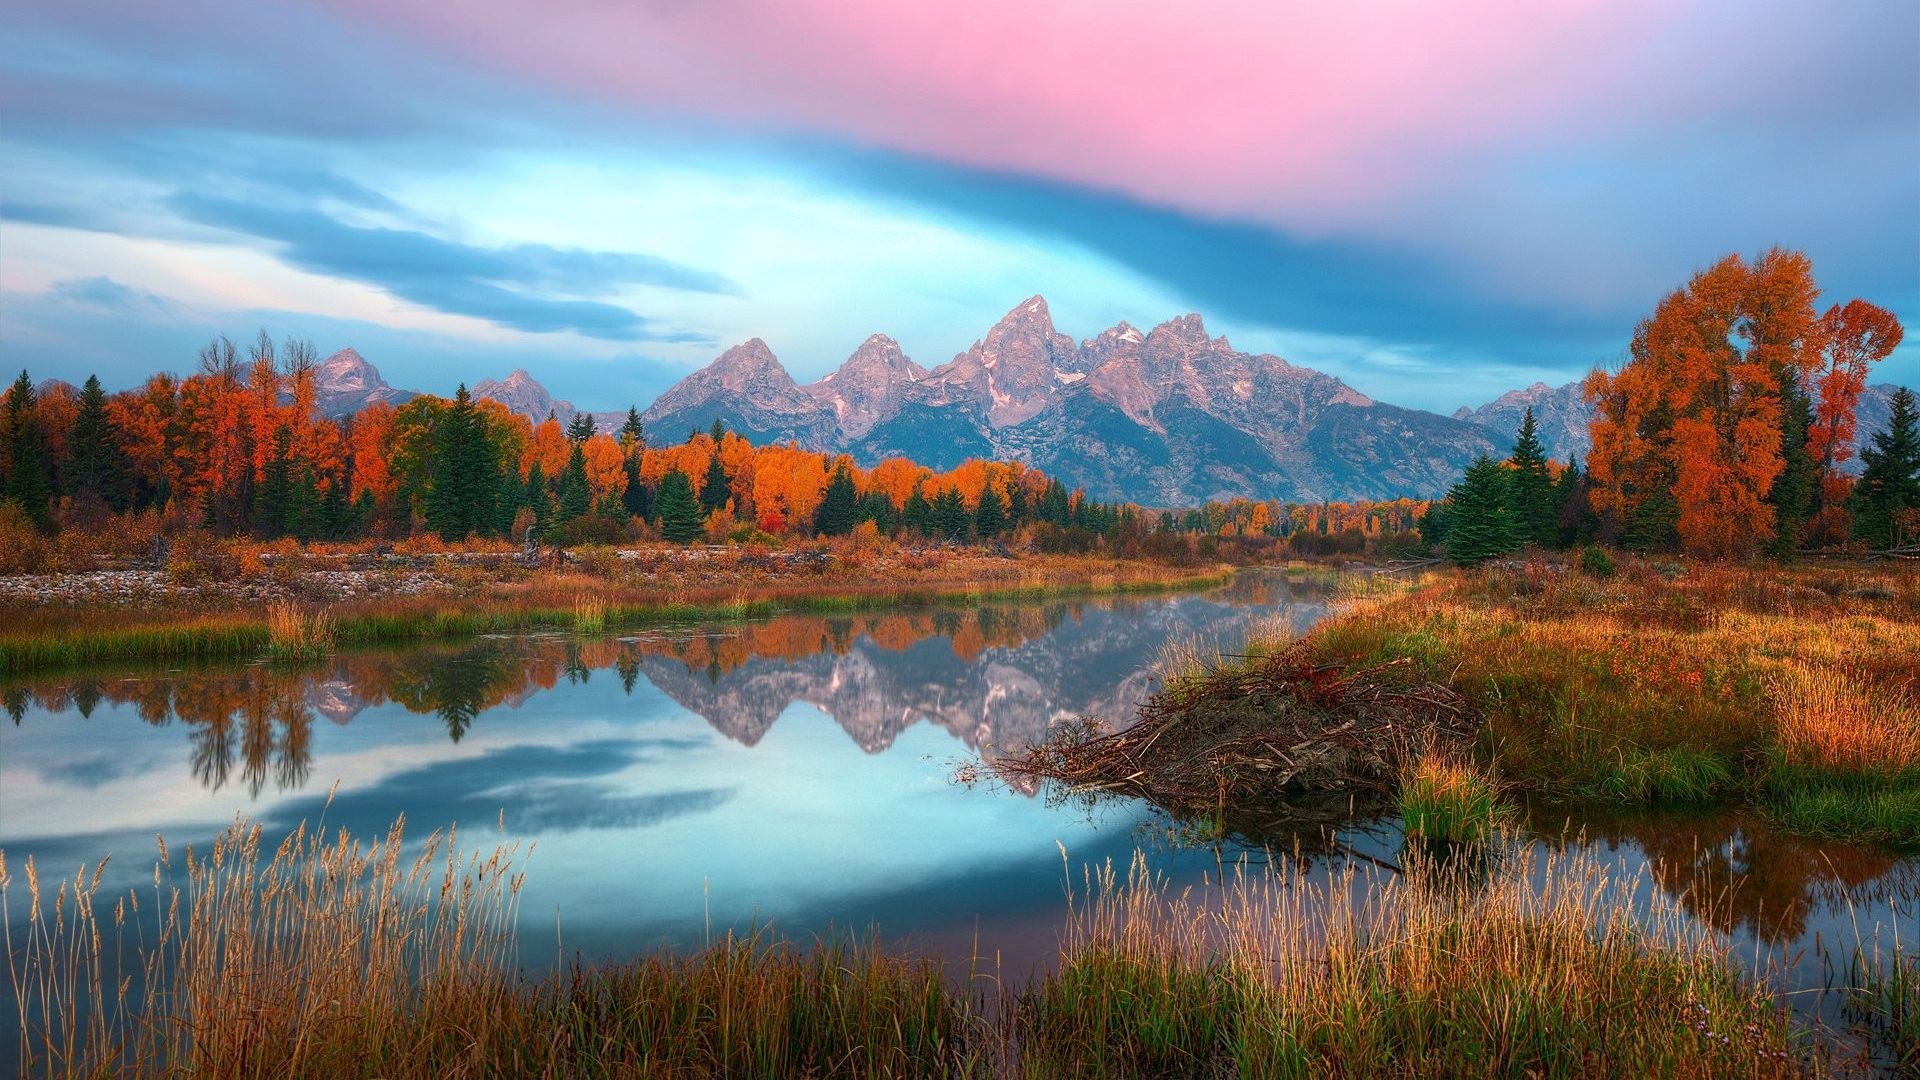 1920x1080 November 18, 2016 - Usa River Mountain Wyoming Autumn Reflection Lake Nature  Wallpapers Iphone 6